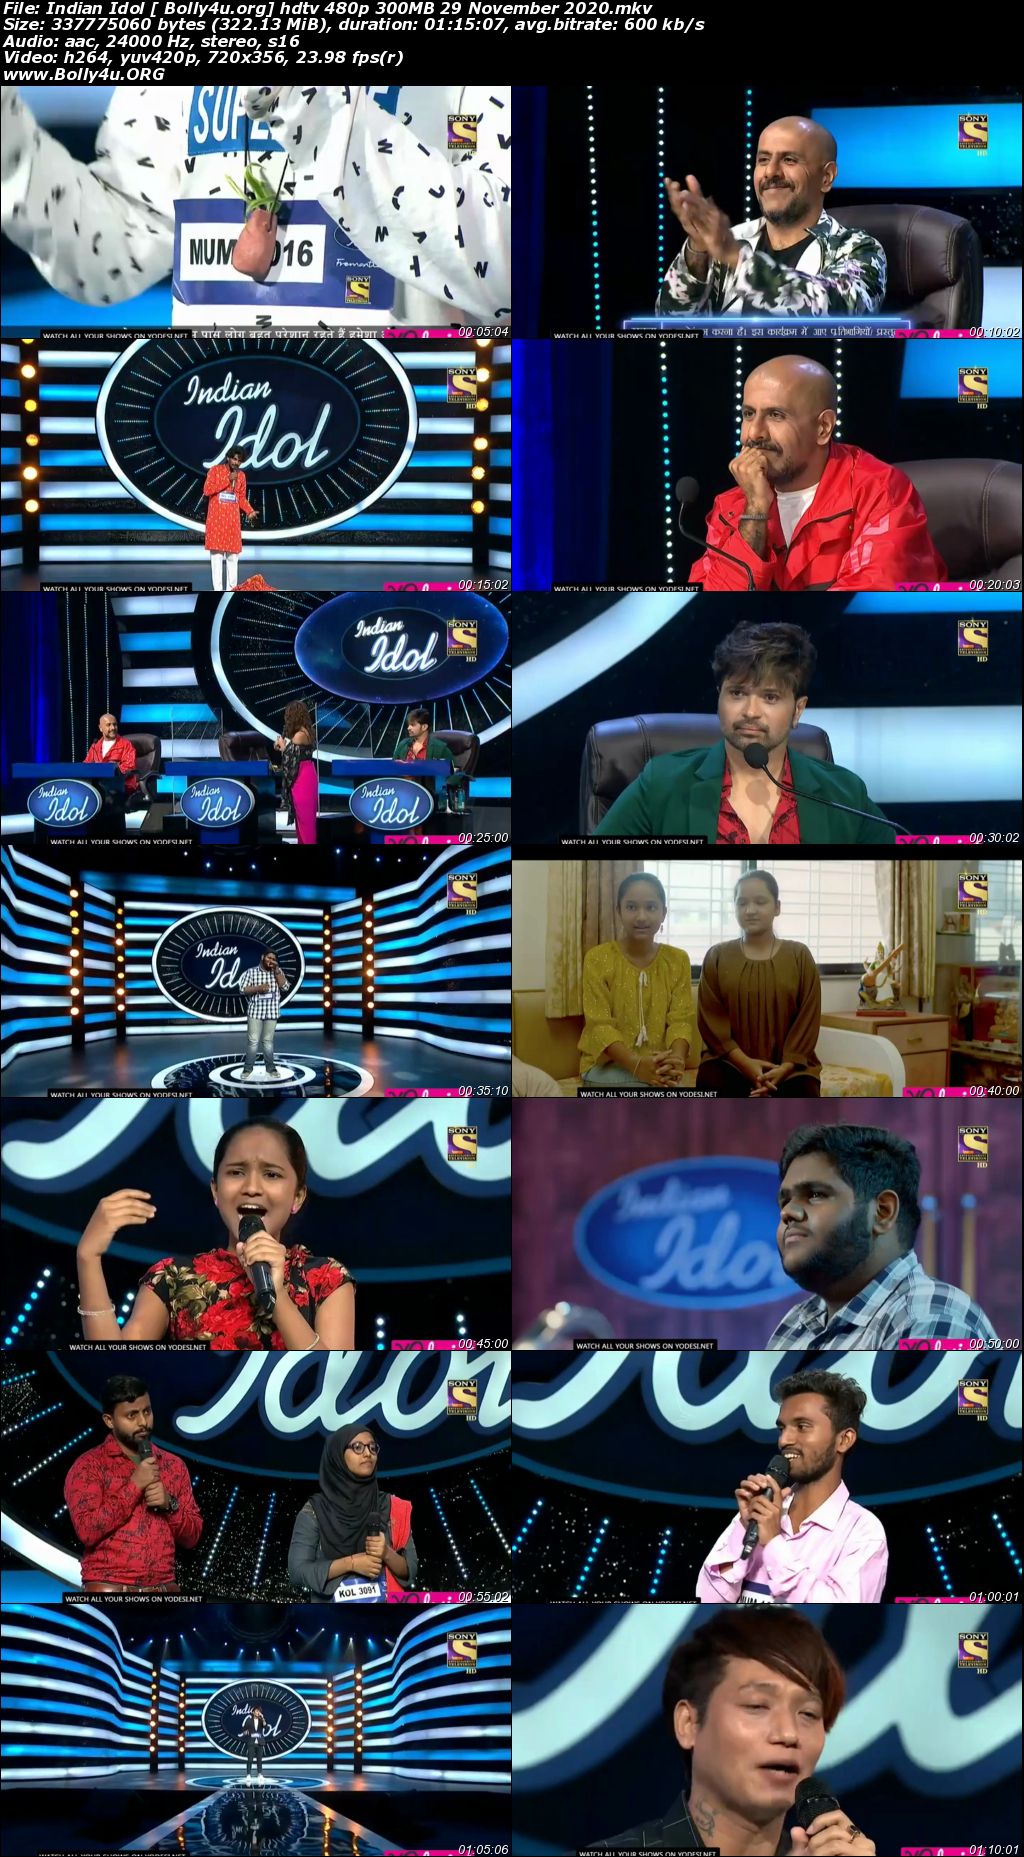 Indian Idol 2020 HDTV 480p 300MB 29 November 2020 Download